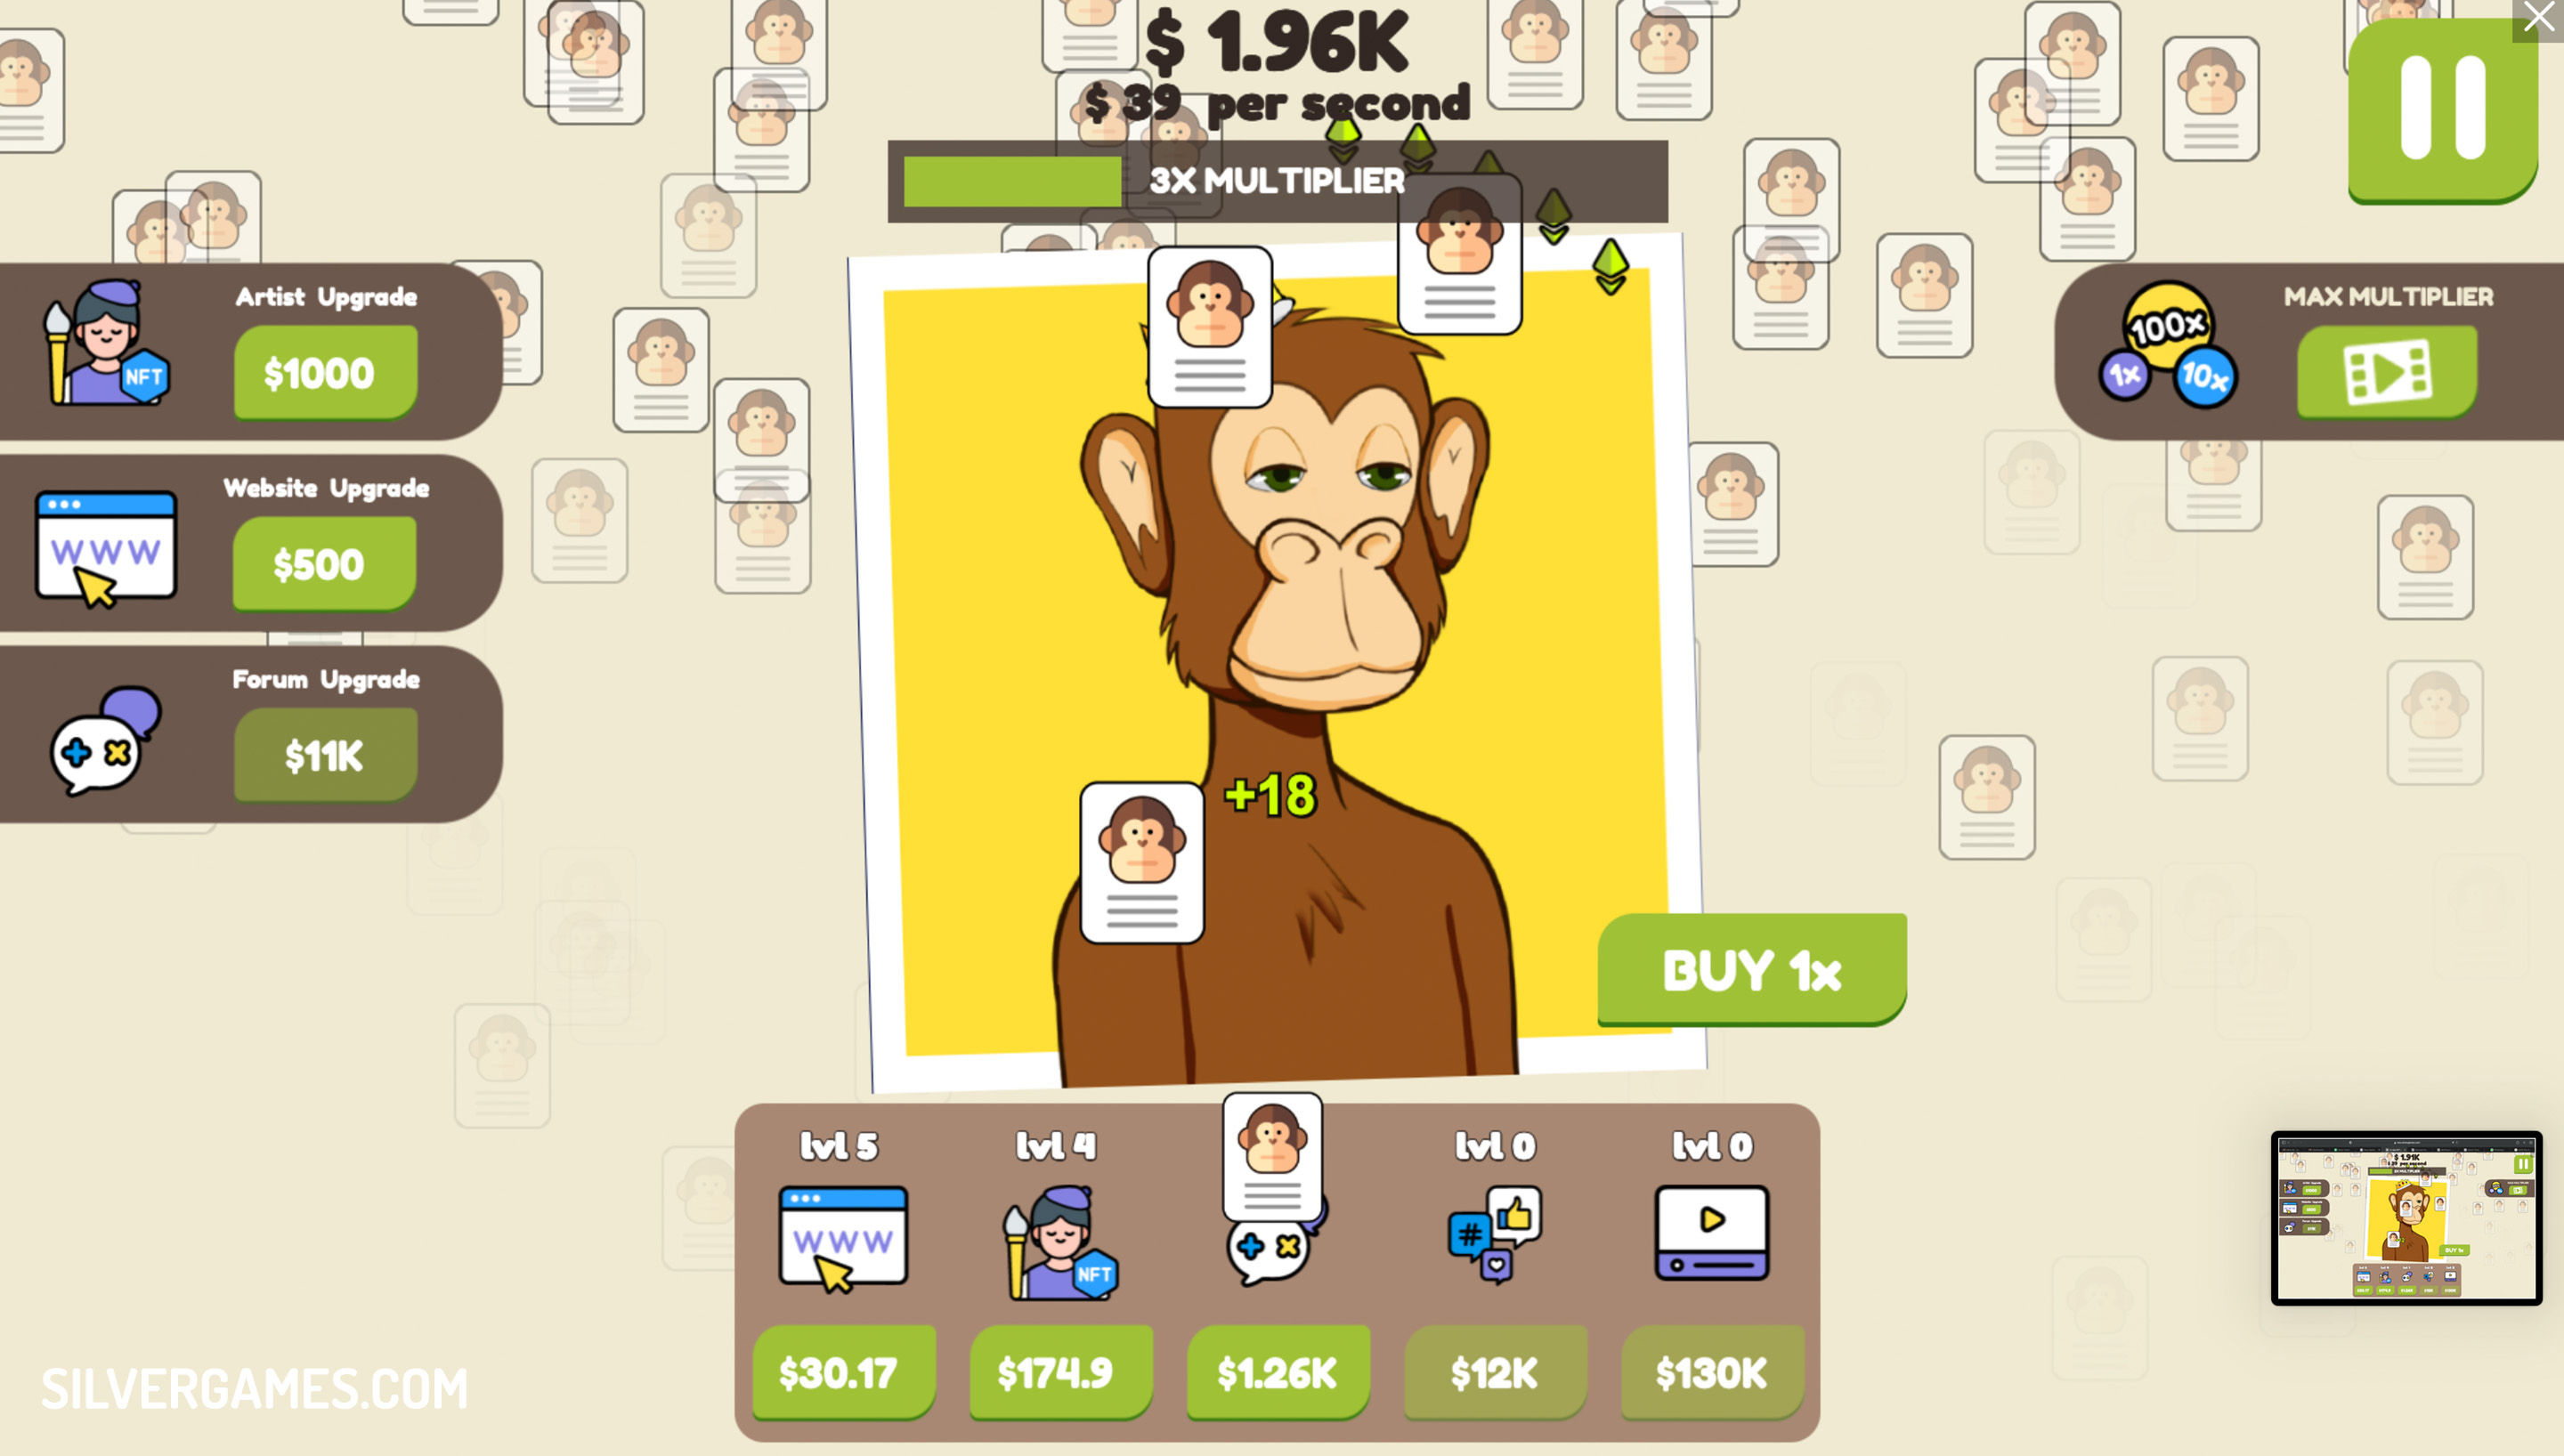 Monkey Evolution: Idle Clicker – Apps no Google Play